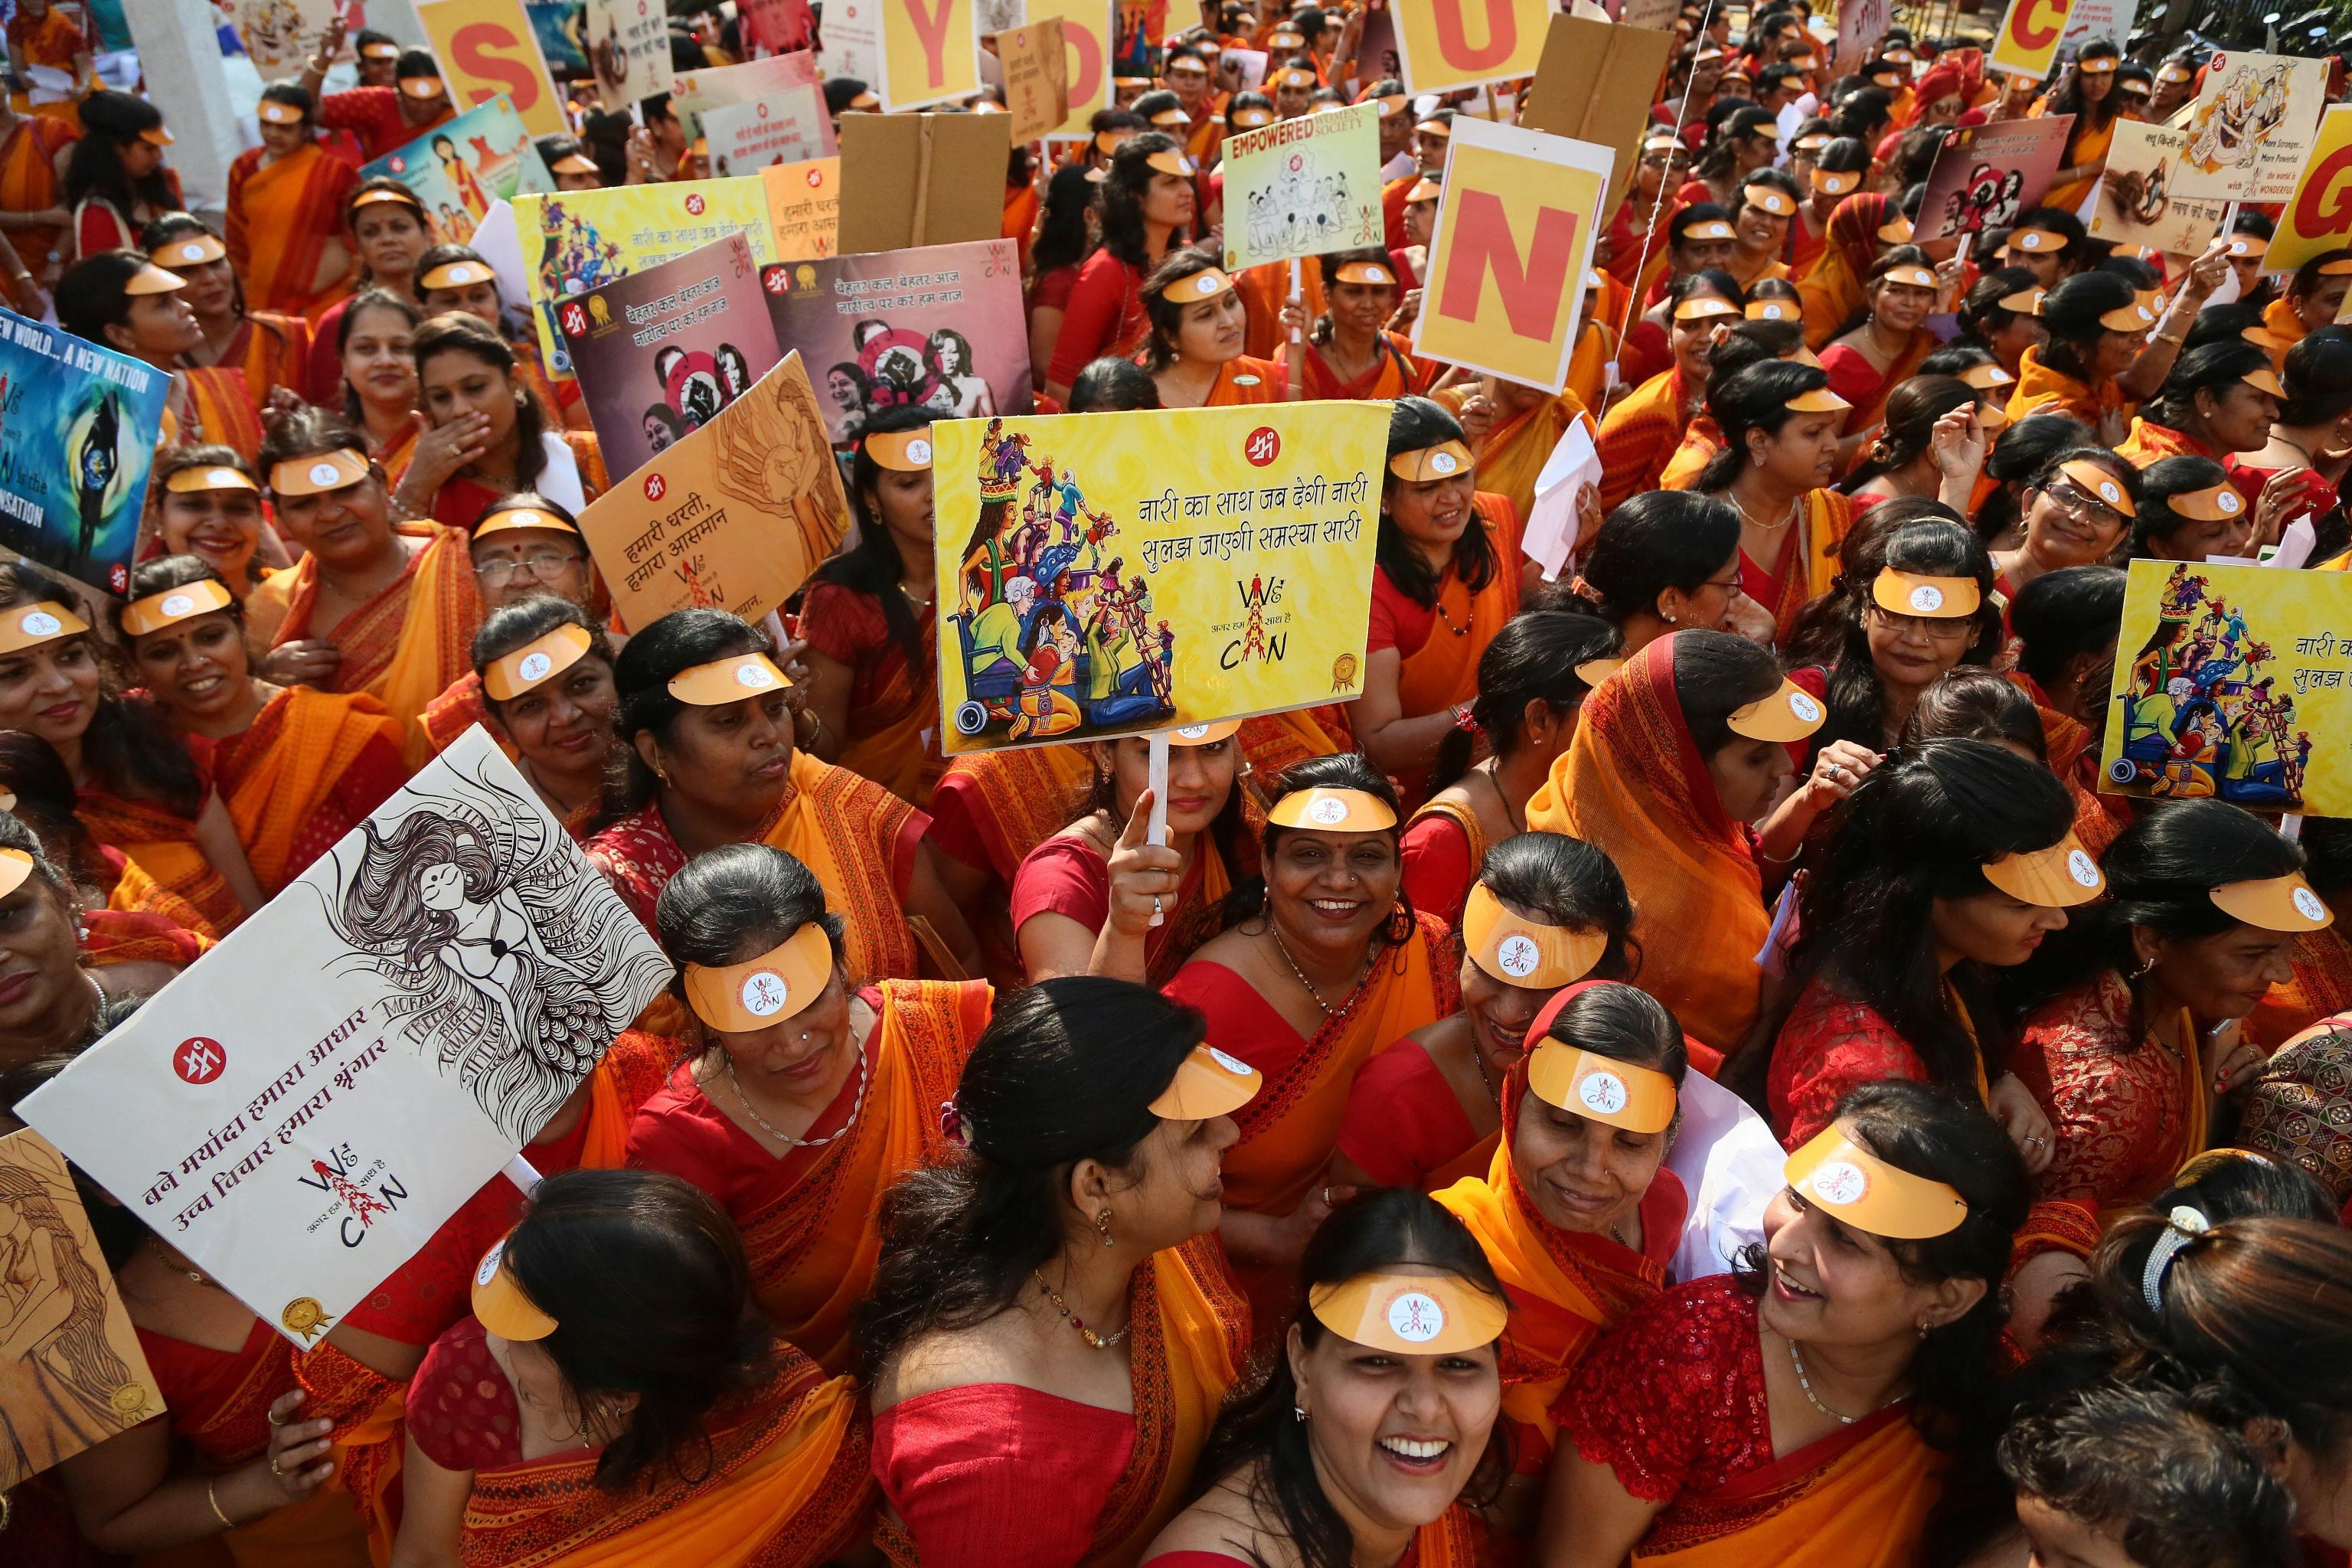 Sari arancio hanno dipinto il raduno delle donne indiane a Mumbai